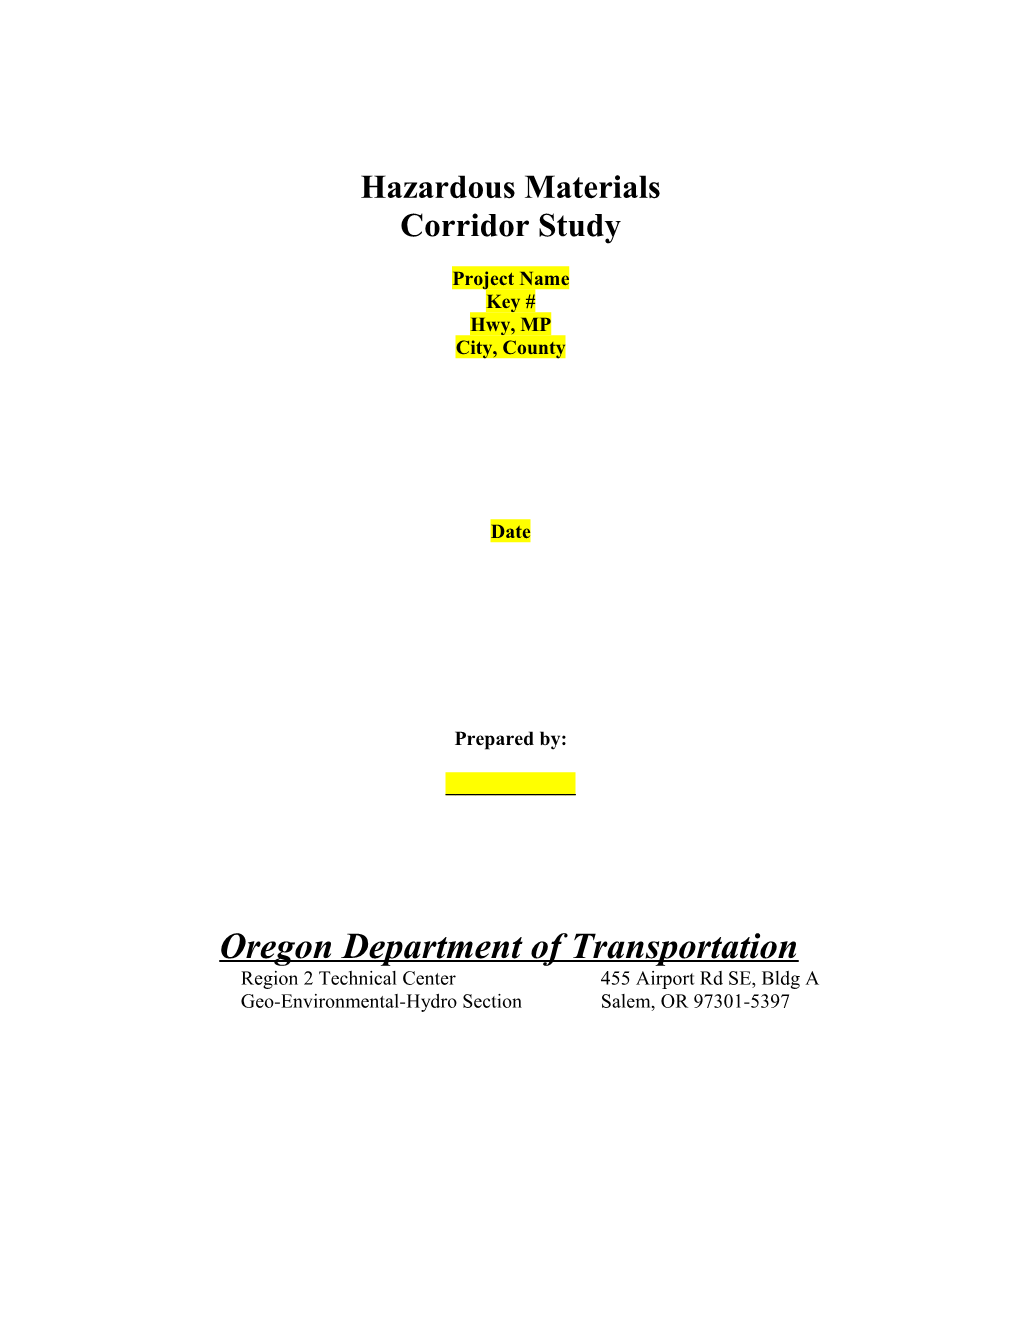 Level 1 - Hazardous Materials Corridor Study